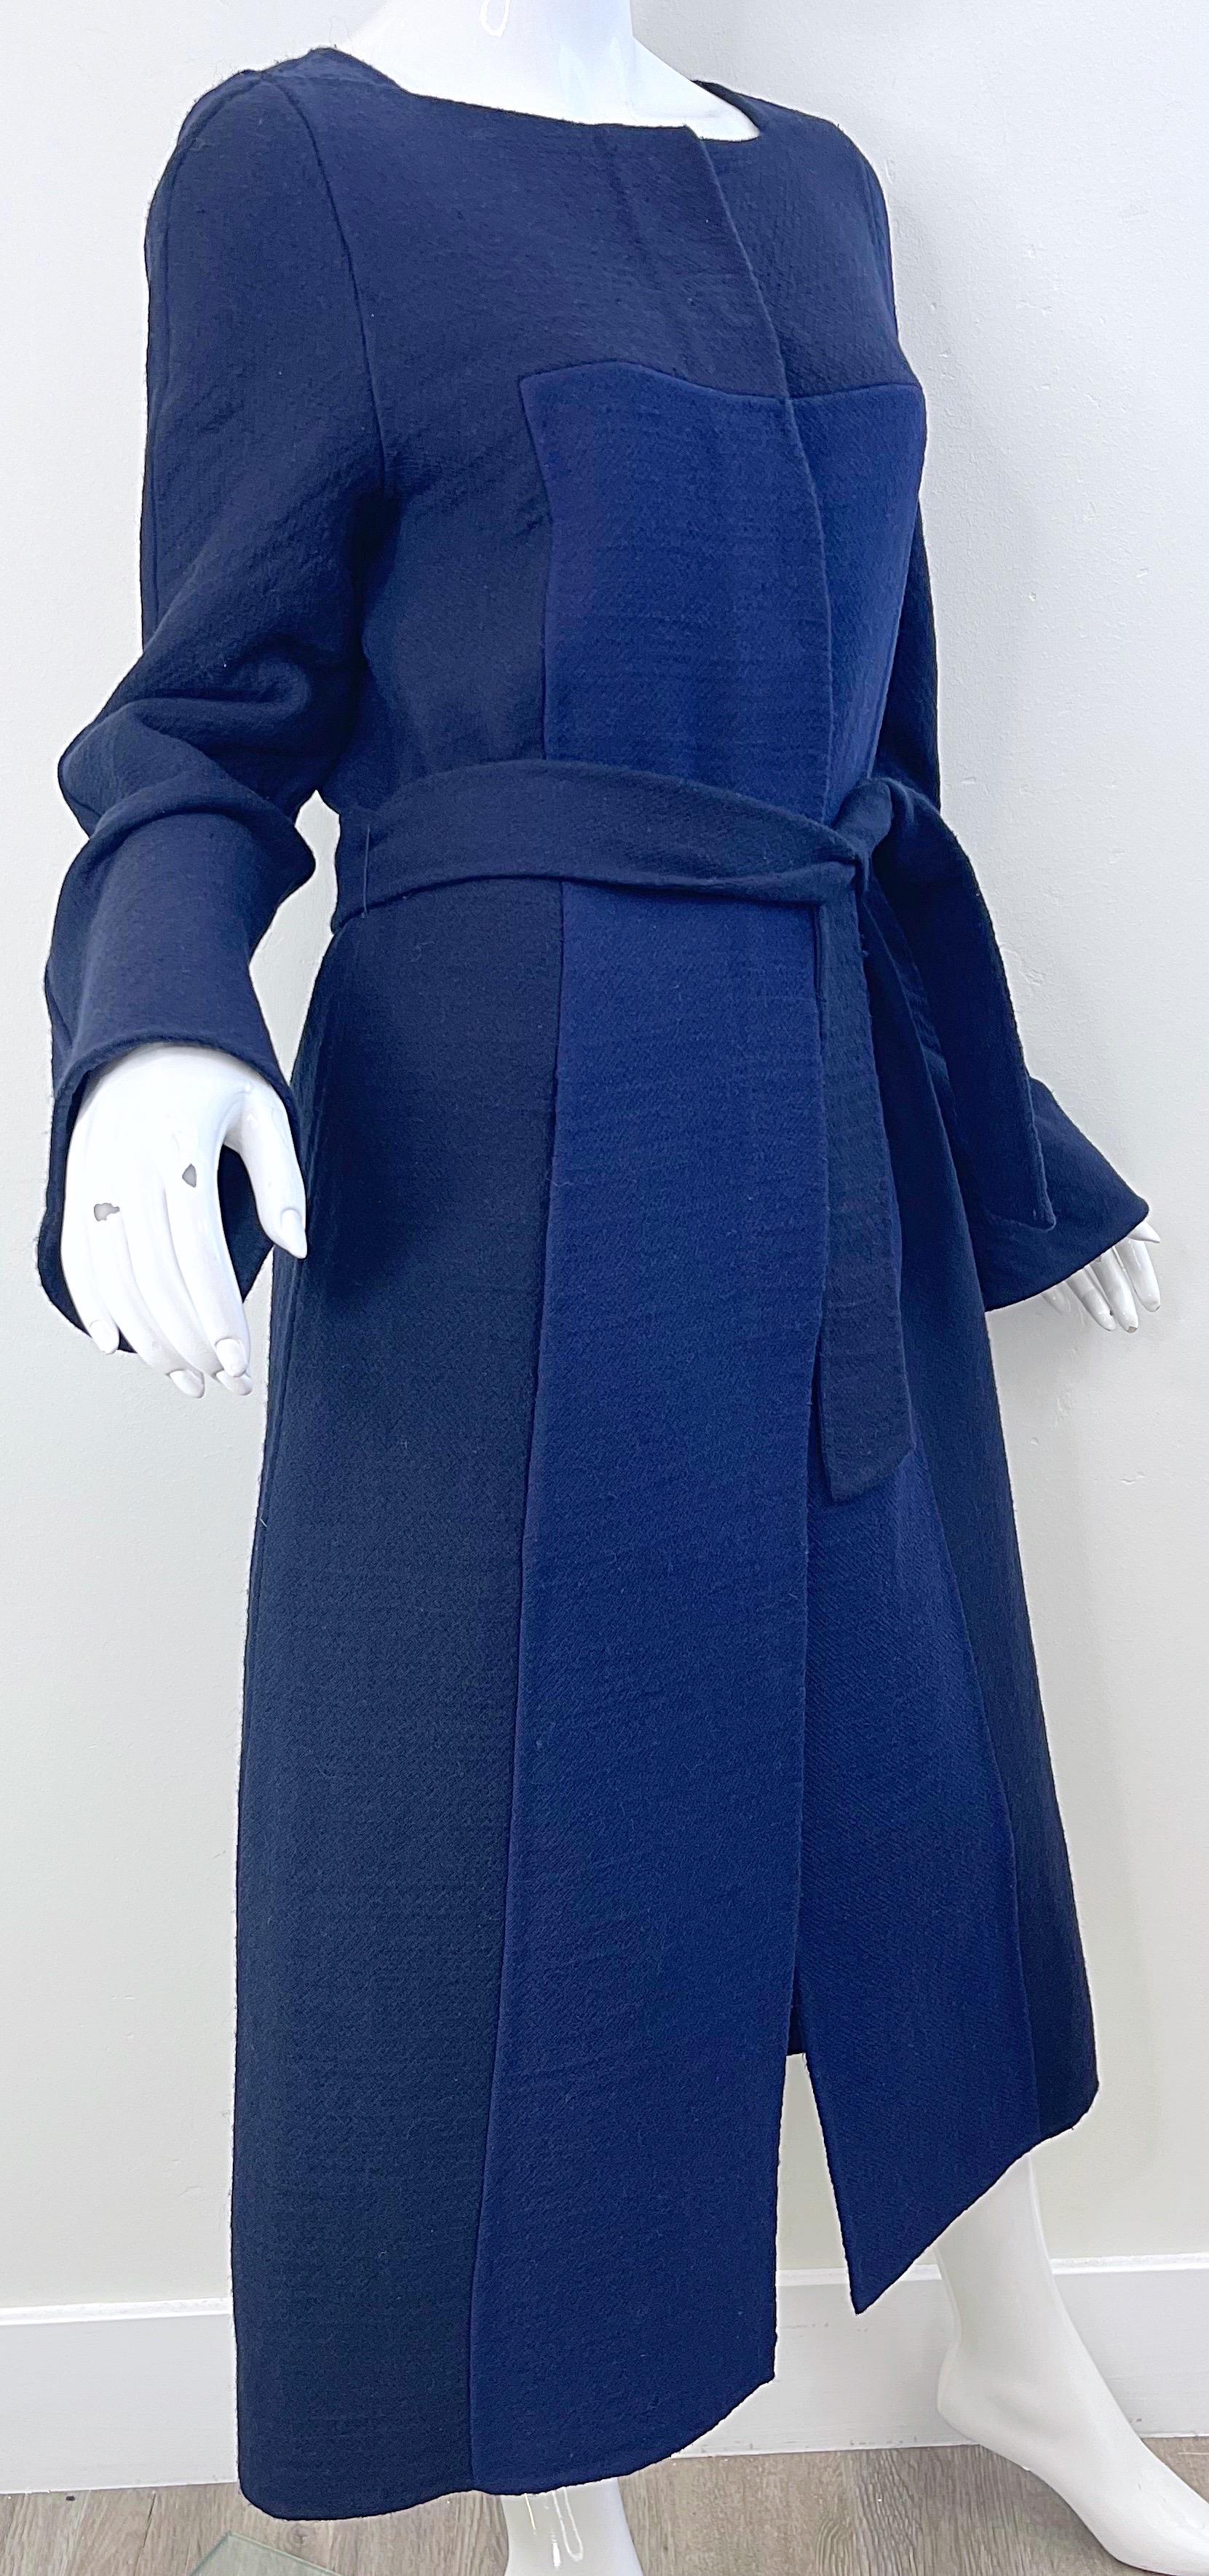 Marc Jacobs 2000s Size 8 Navy Blue Wool Belted Color Block Y2K Jacket Coat For Sale 5